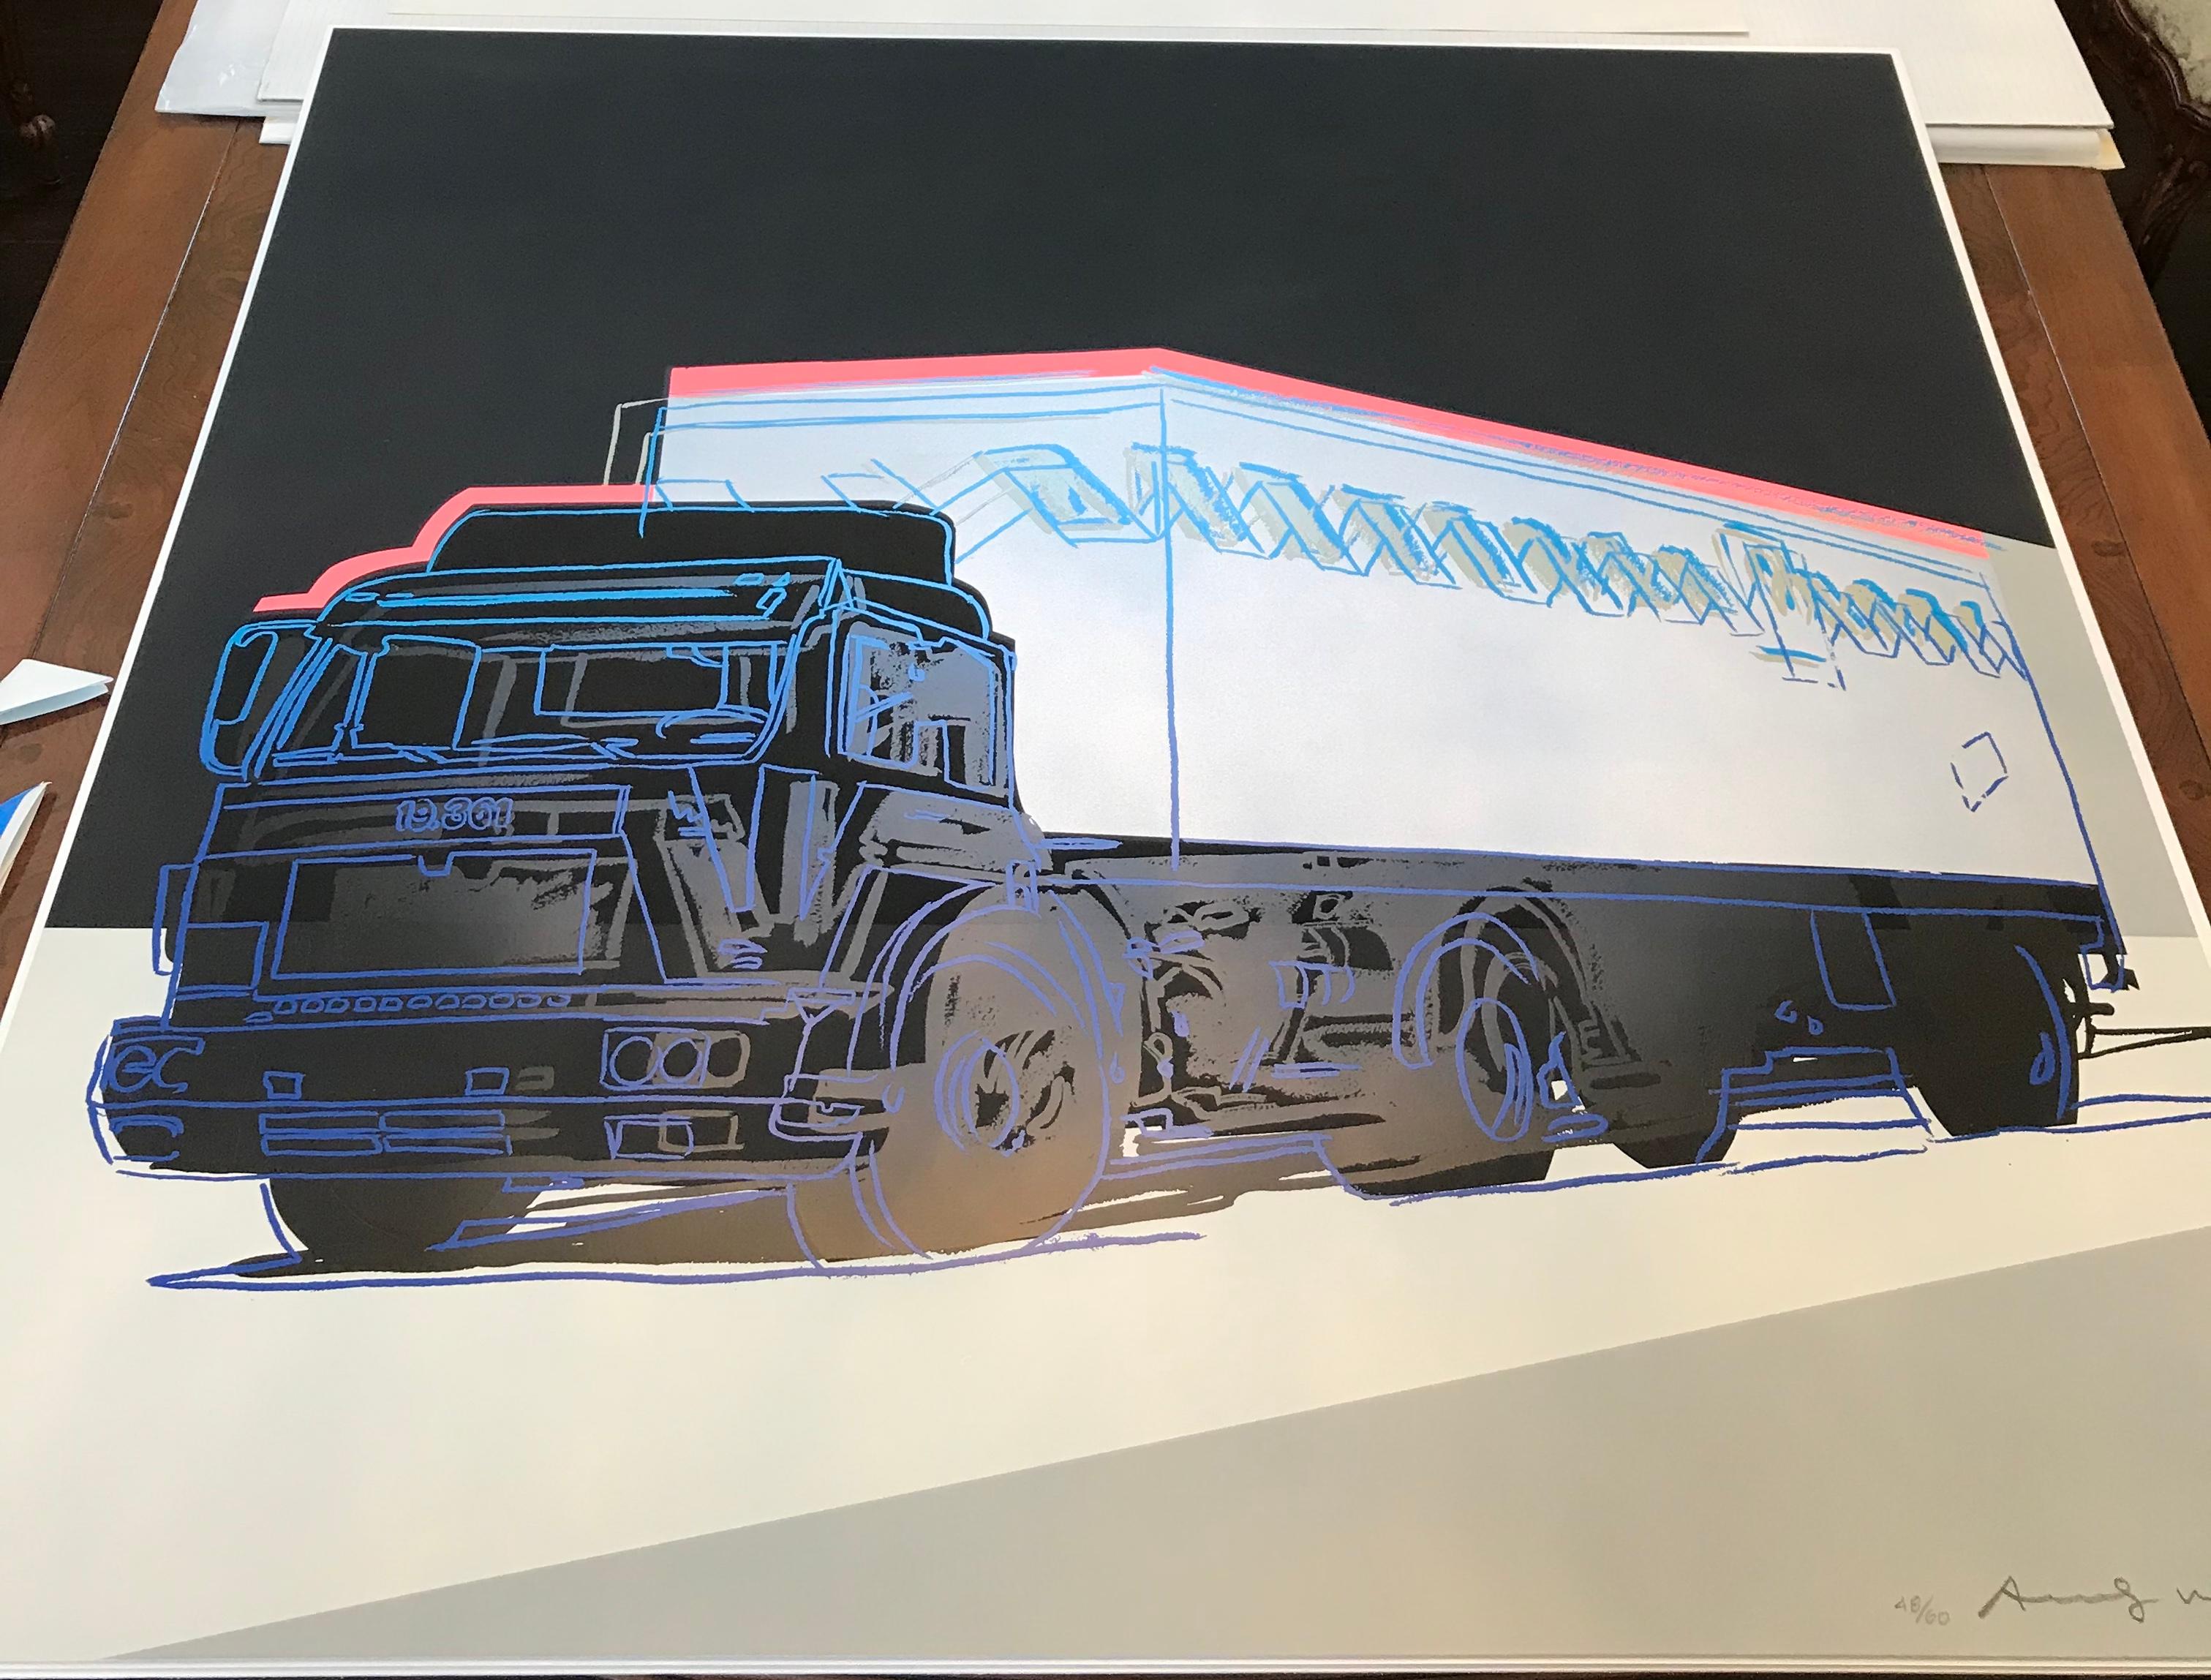 Truck 1985 F&S II.370 - Print by Andy Warhol